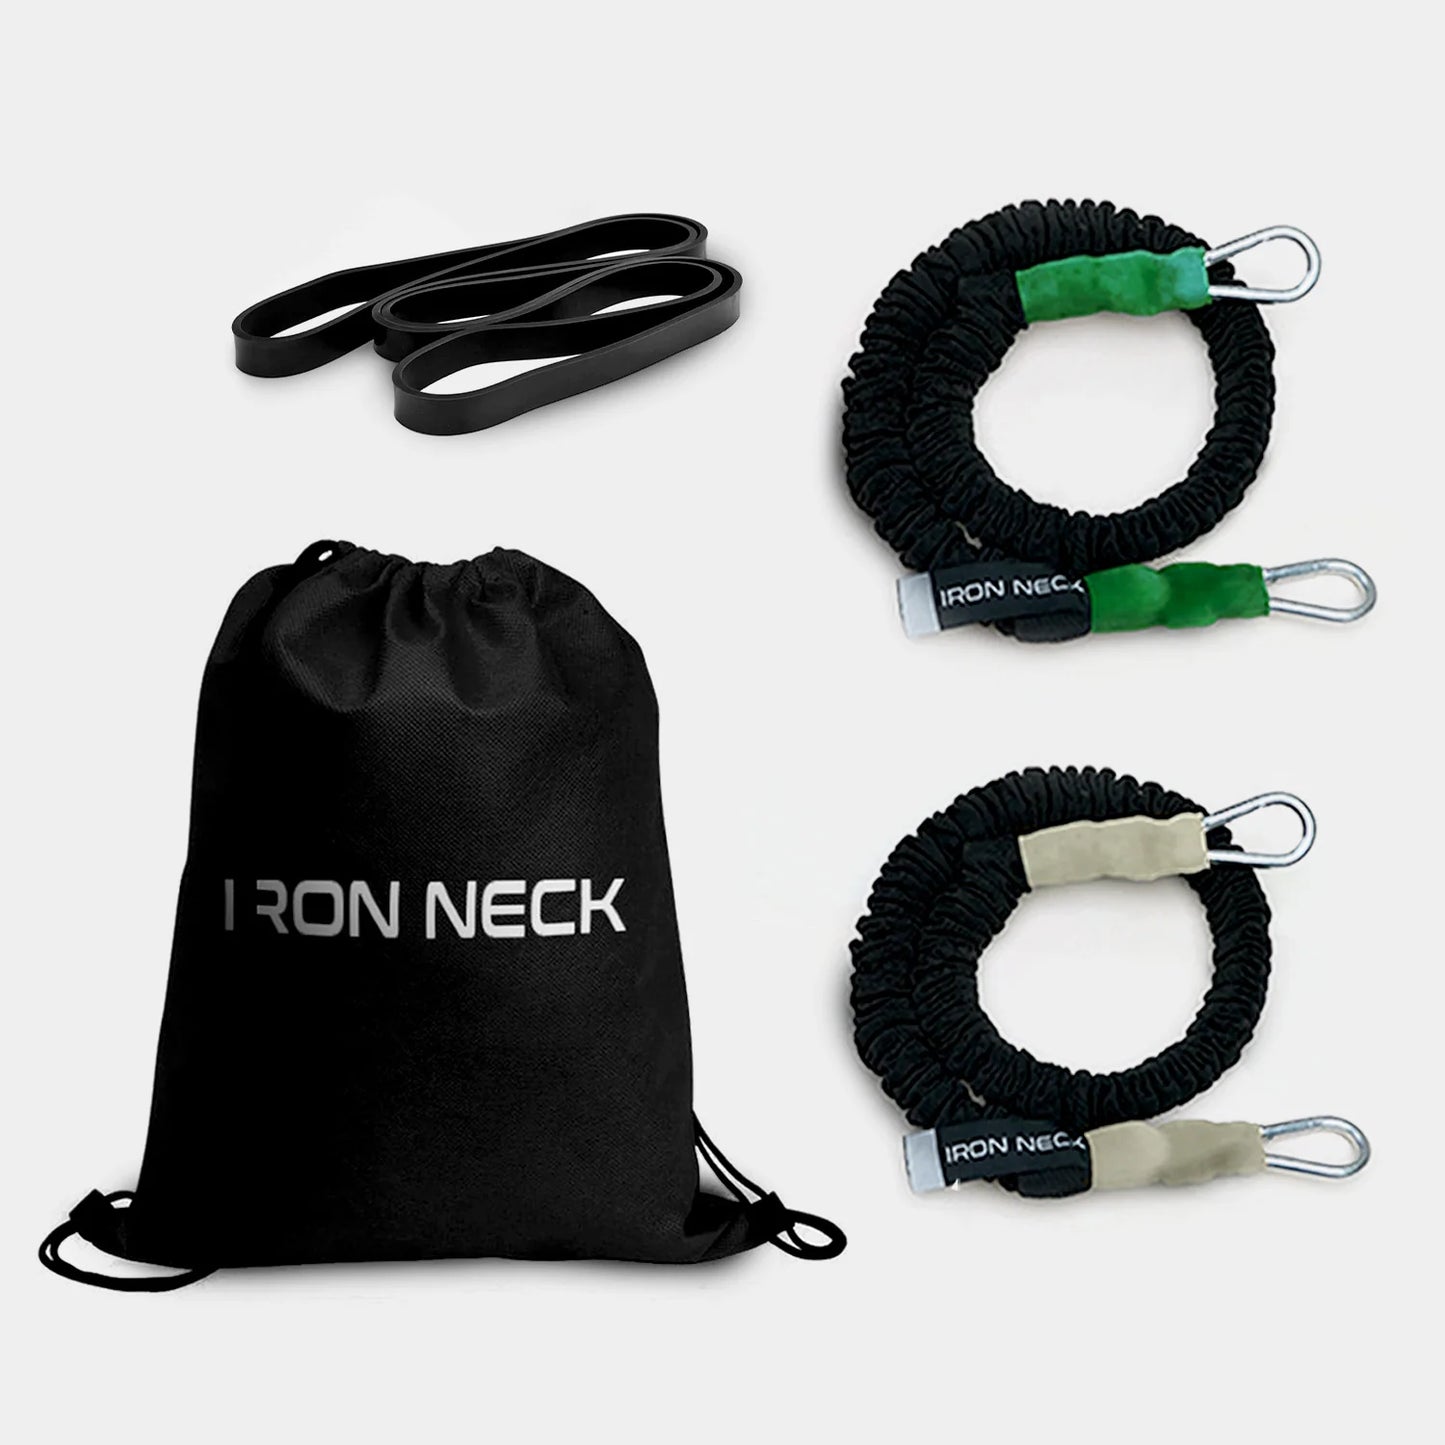 Iron Neck Strength Kit